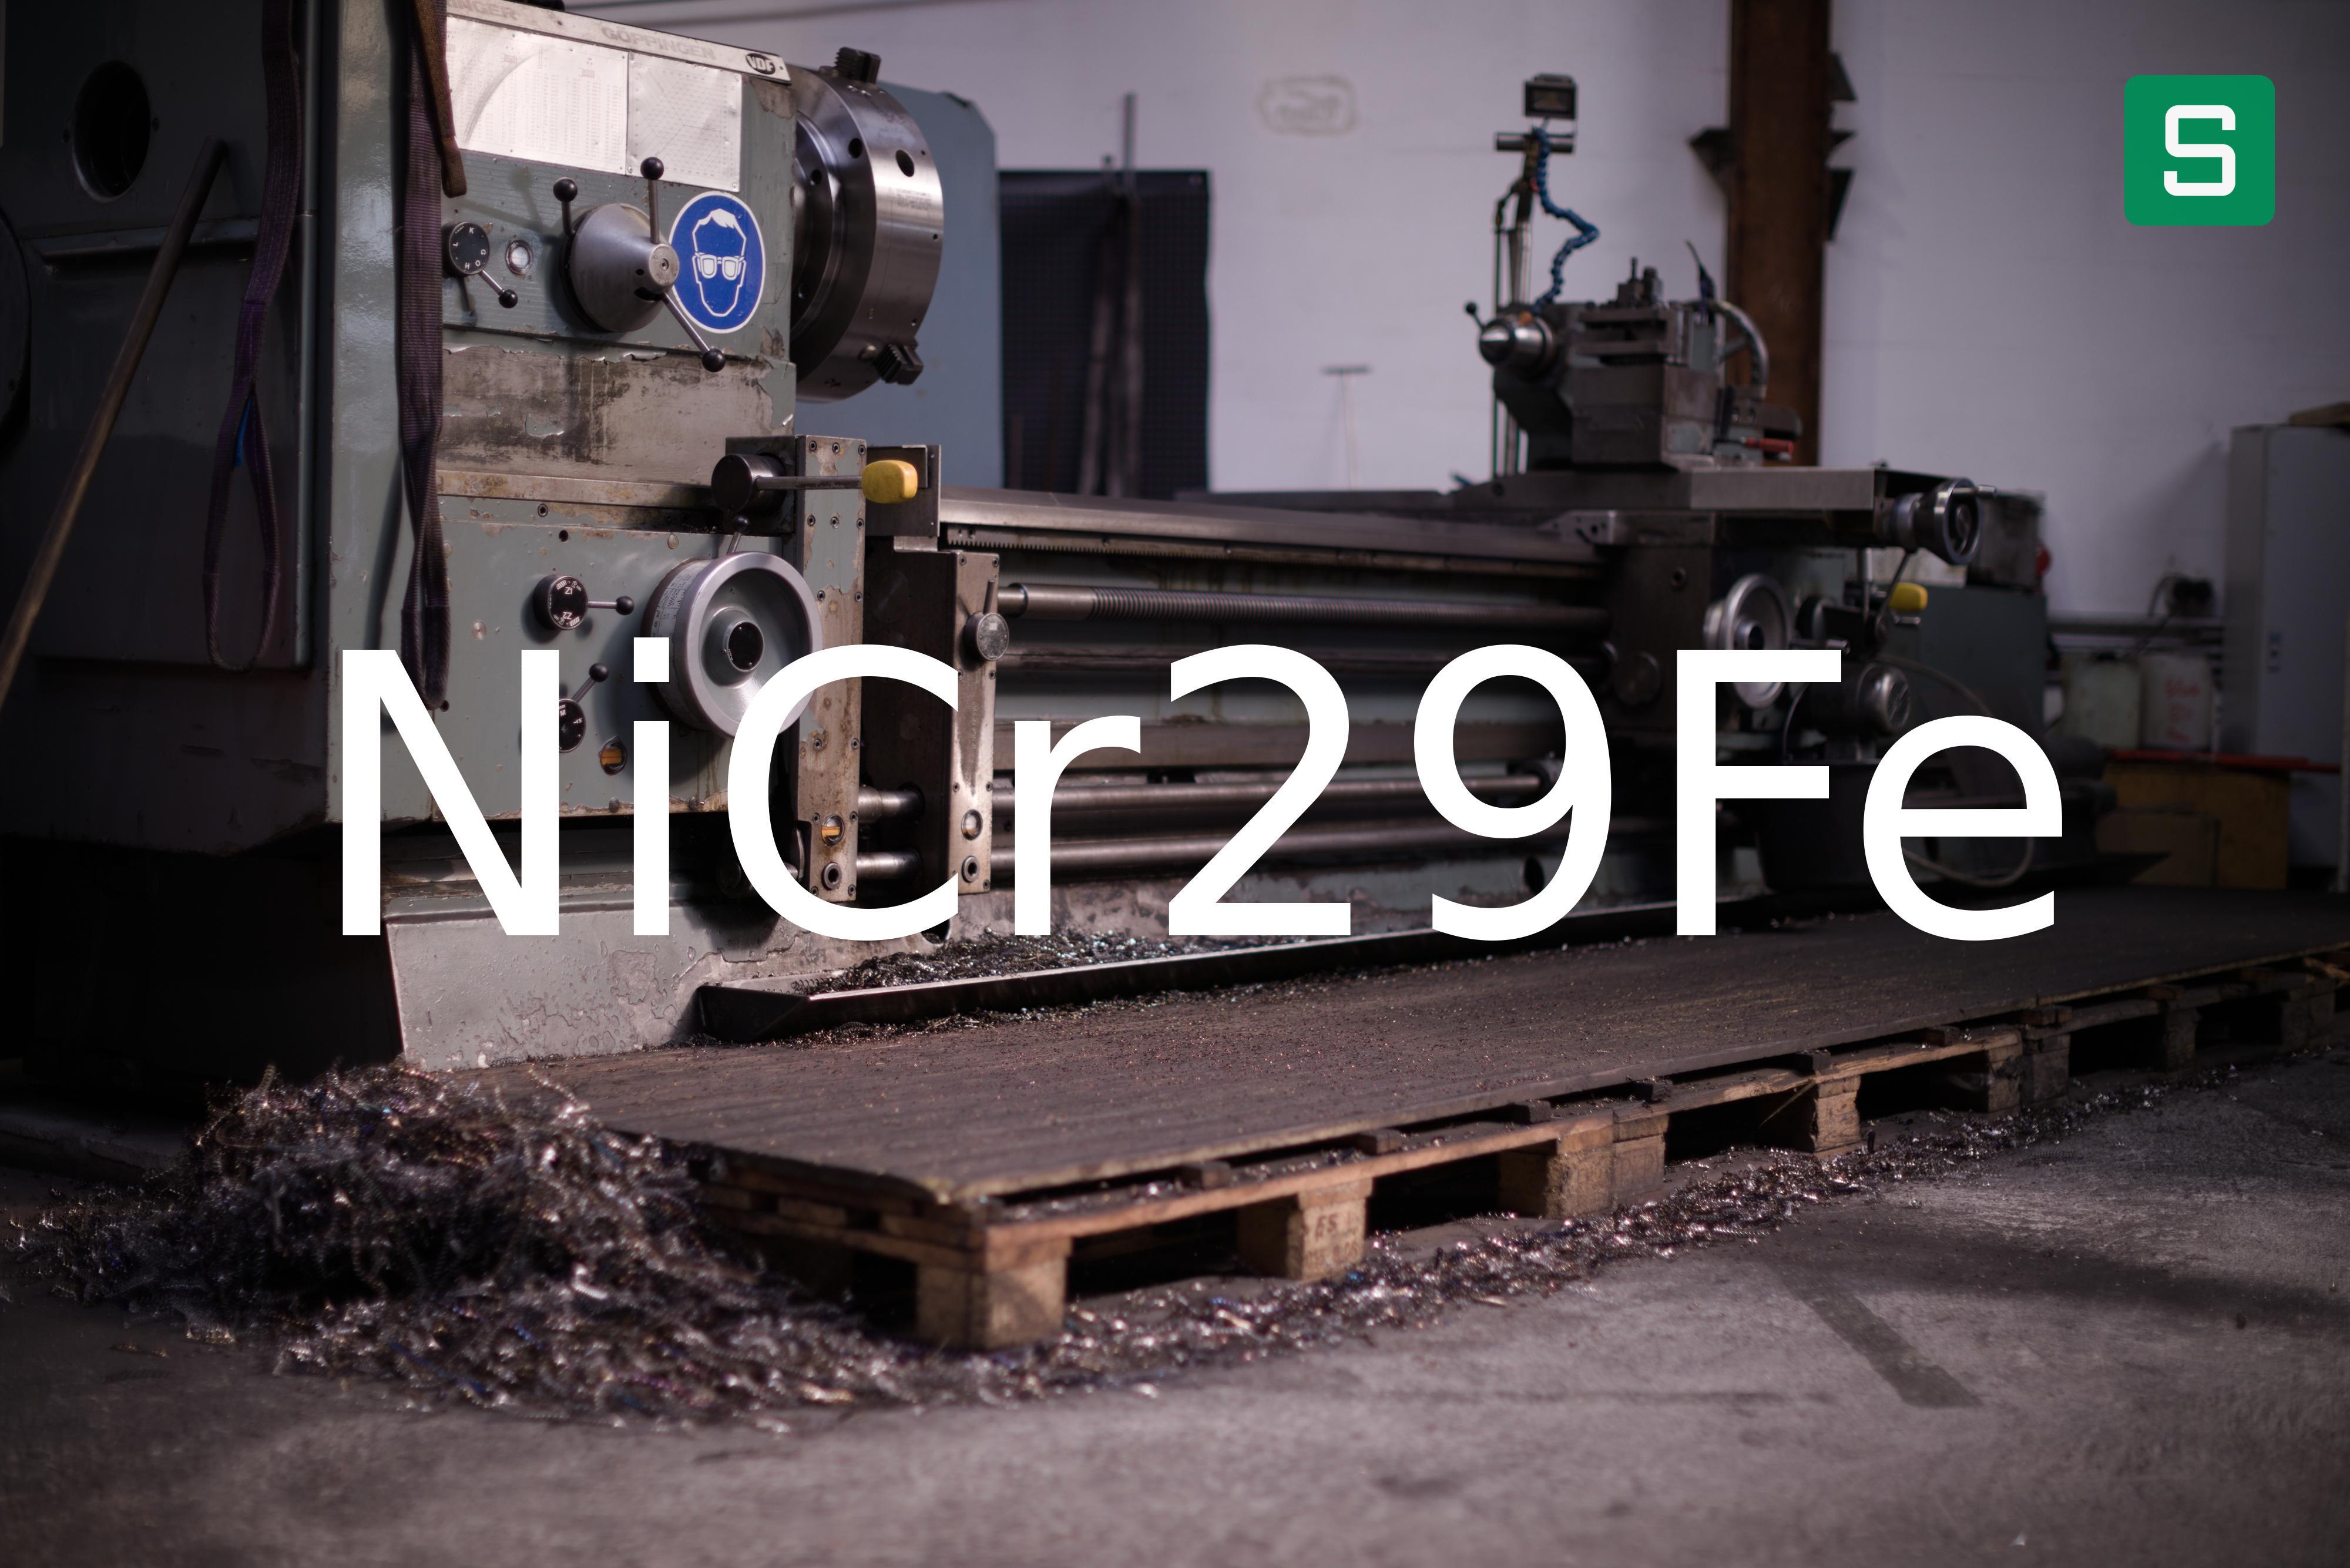 Stahlwerkstoff: NiCr29Fe